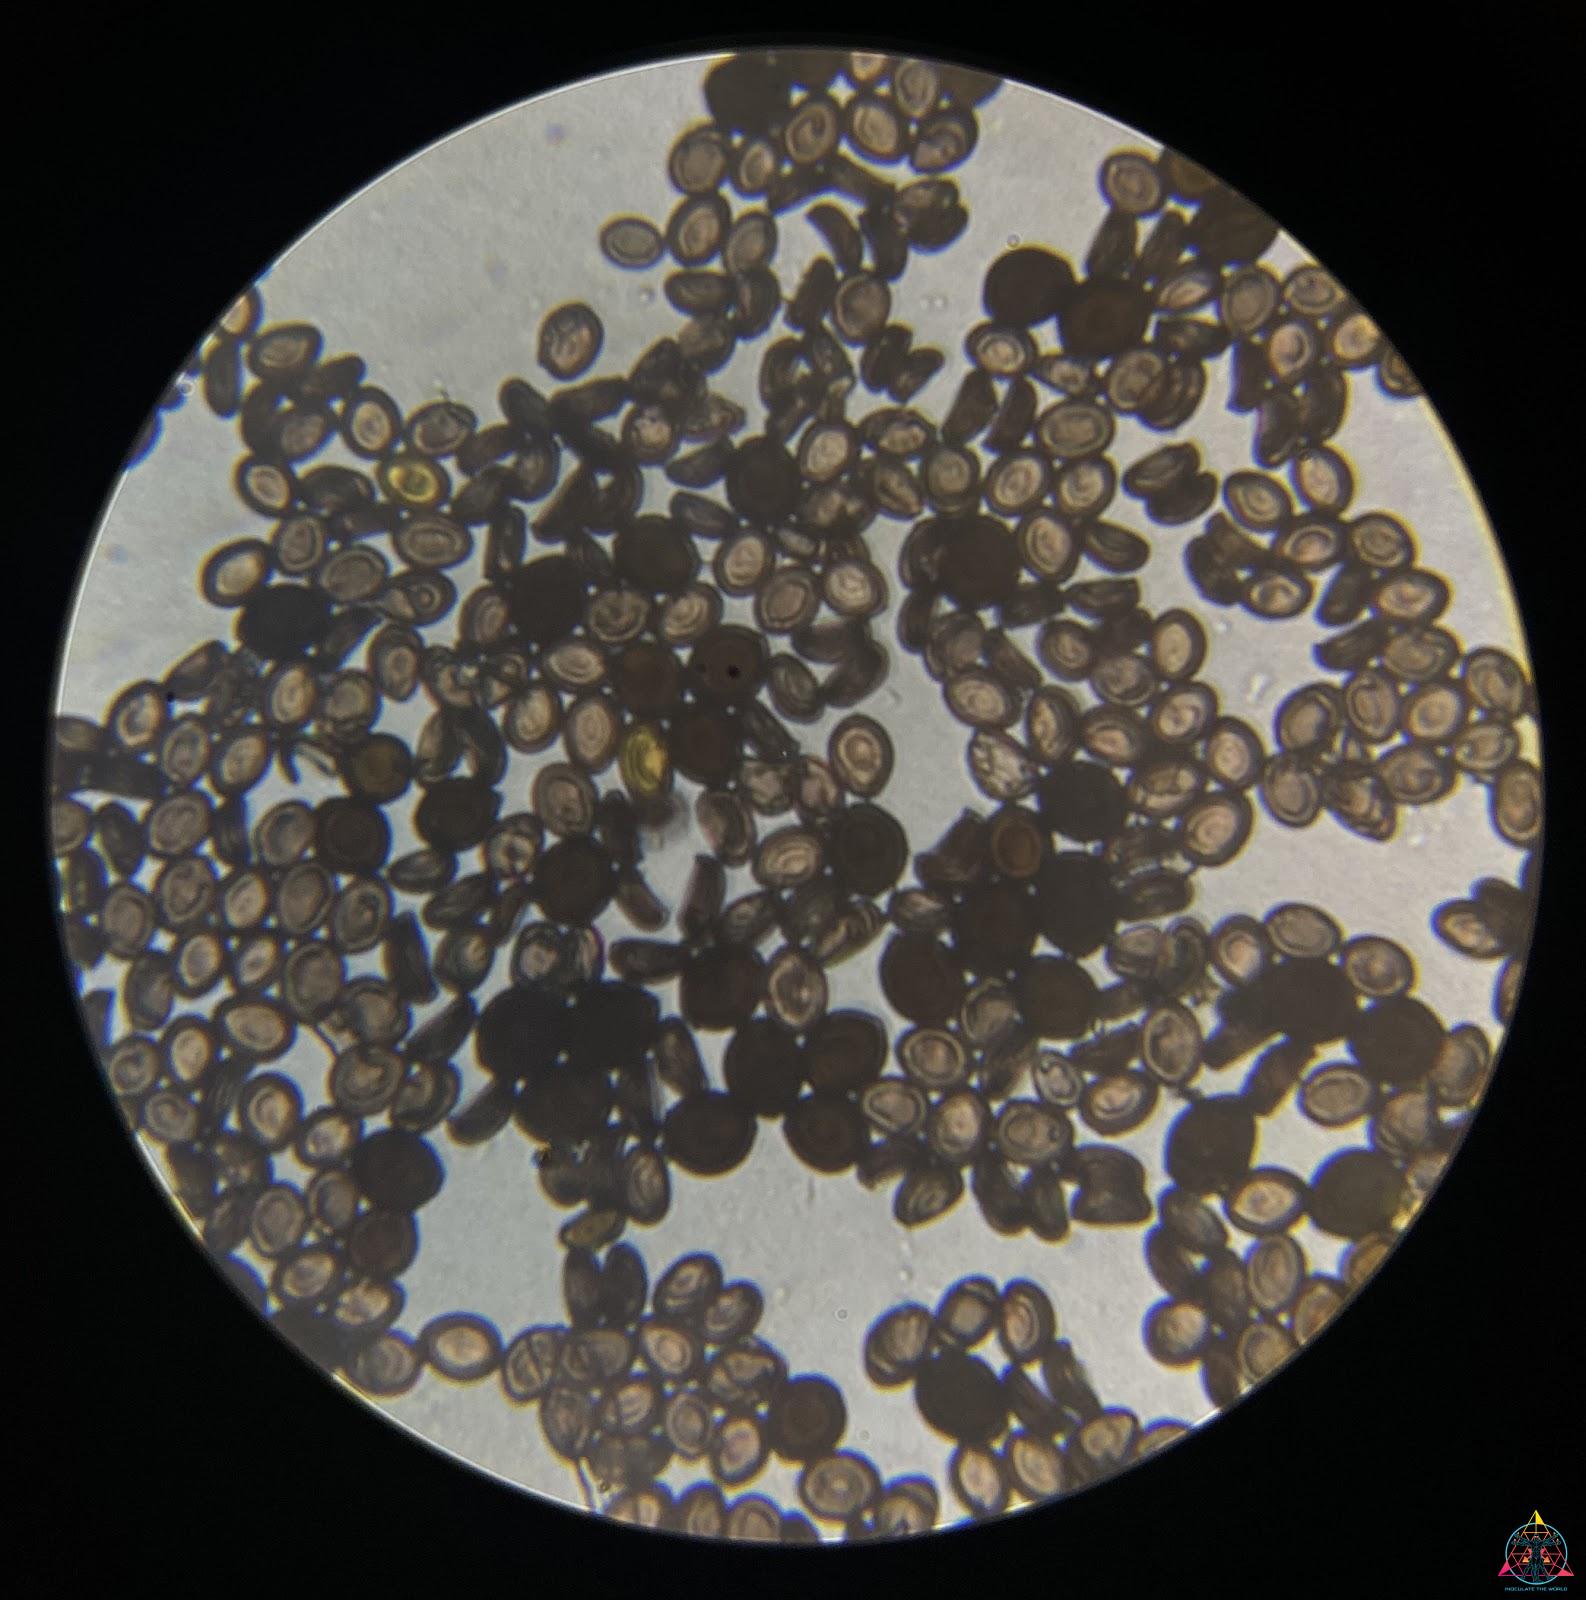 magic mushroom spores under a microscope